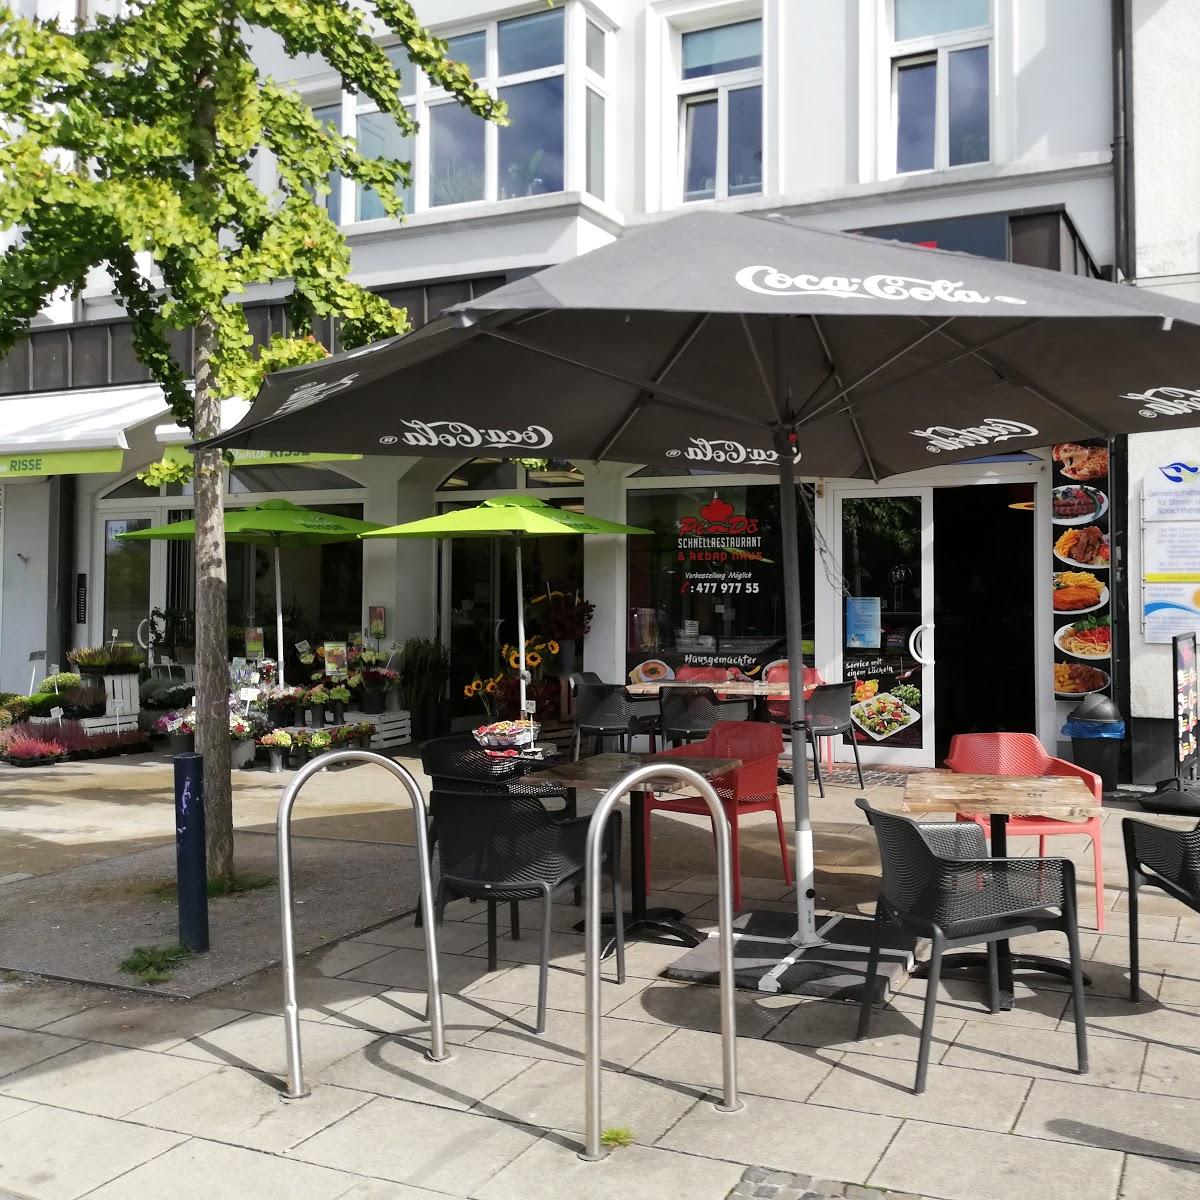 Restaurant "Pi-dö" in Dortmund